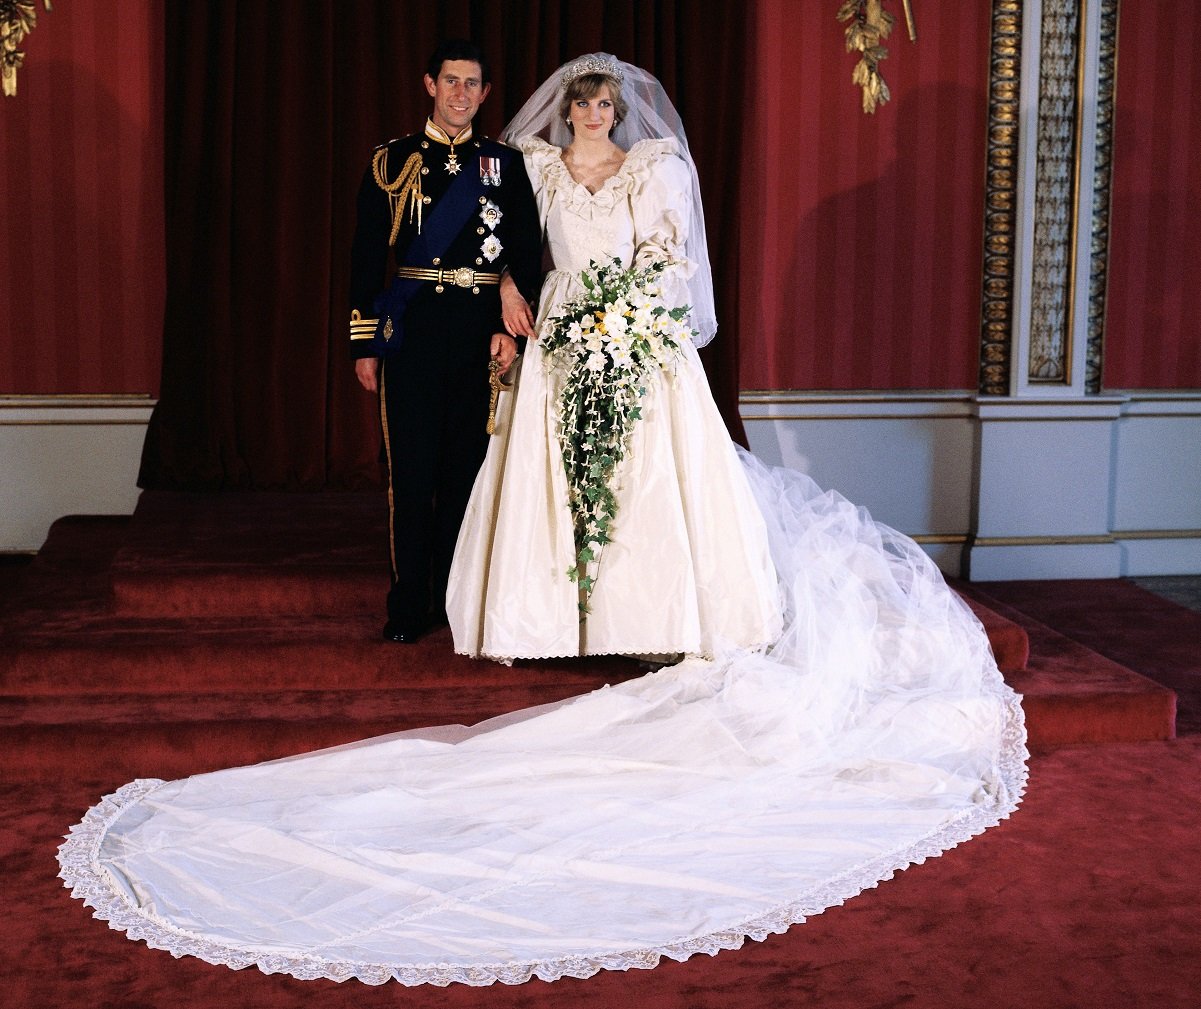 Prince Charles and Princess Diana wedding portrait